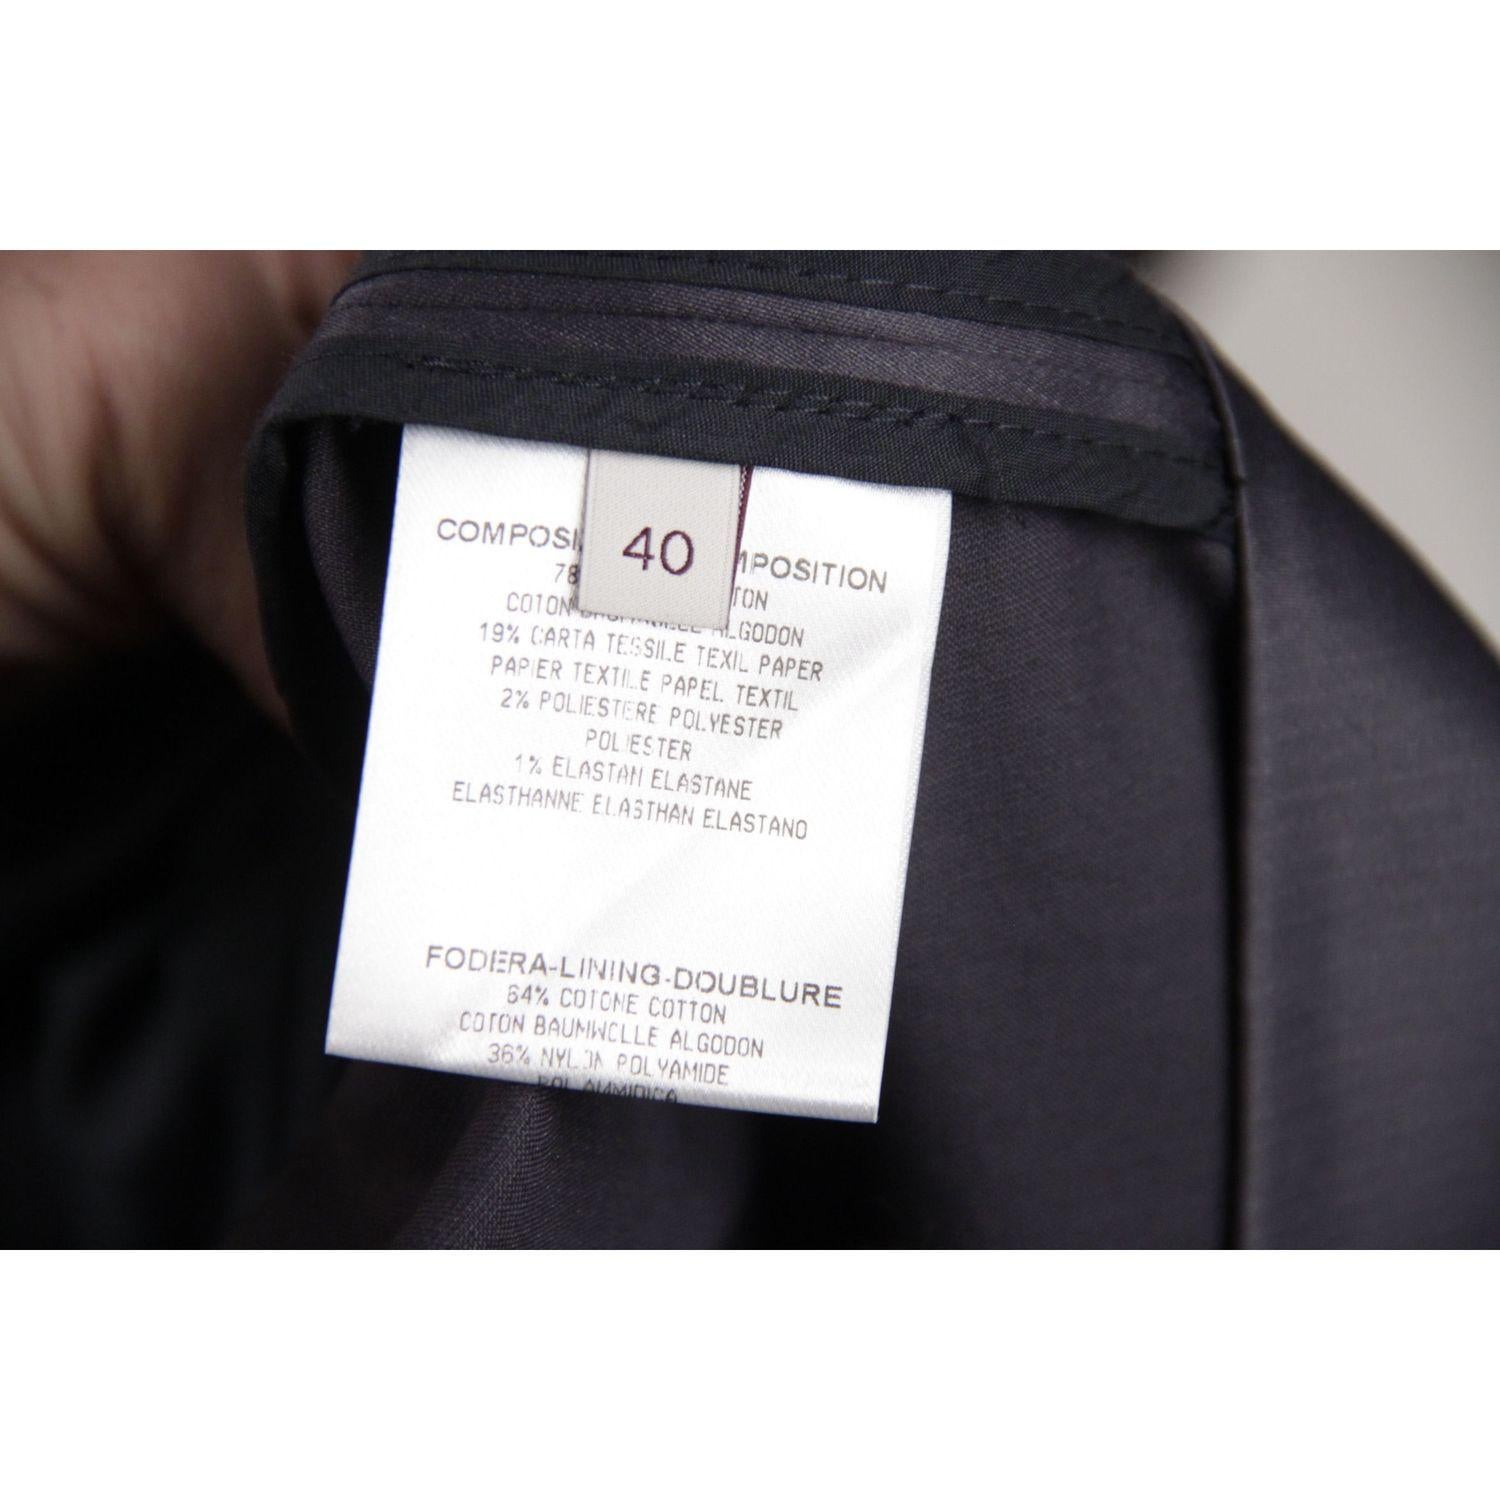 Stella McCartney Navy Blue Cotton Blend Suit Jacket & Trousers Size 40 1